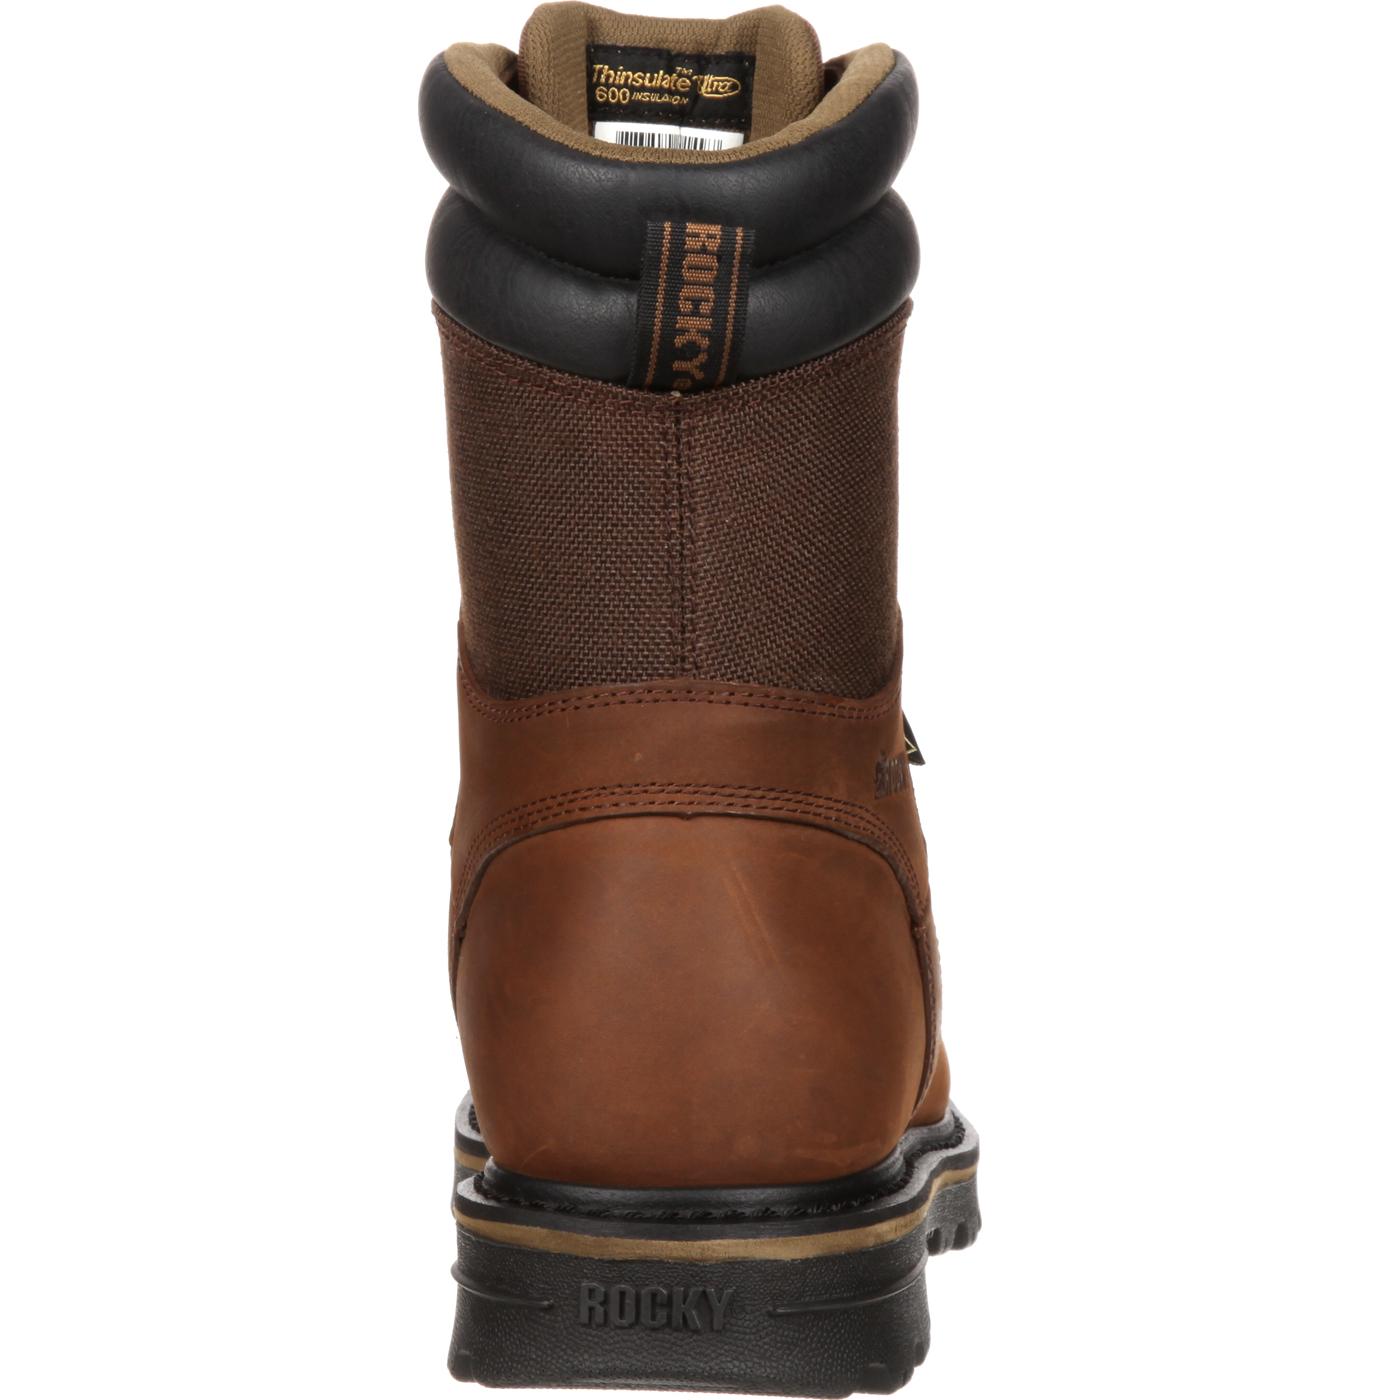 Rocky CornStalker Waterproof Insulated Hunting Boots, #RKYS087